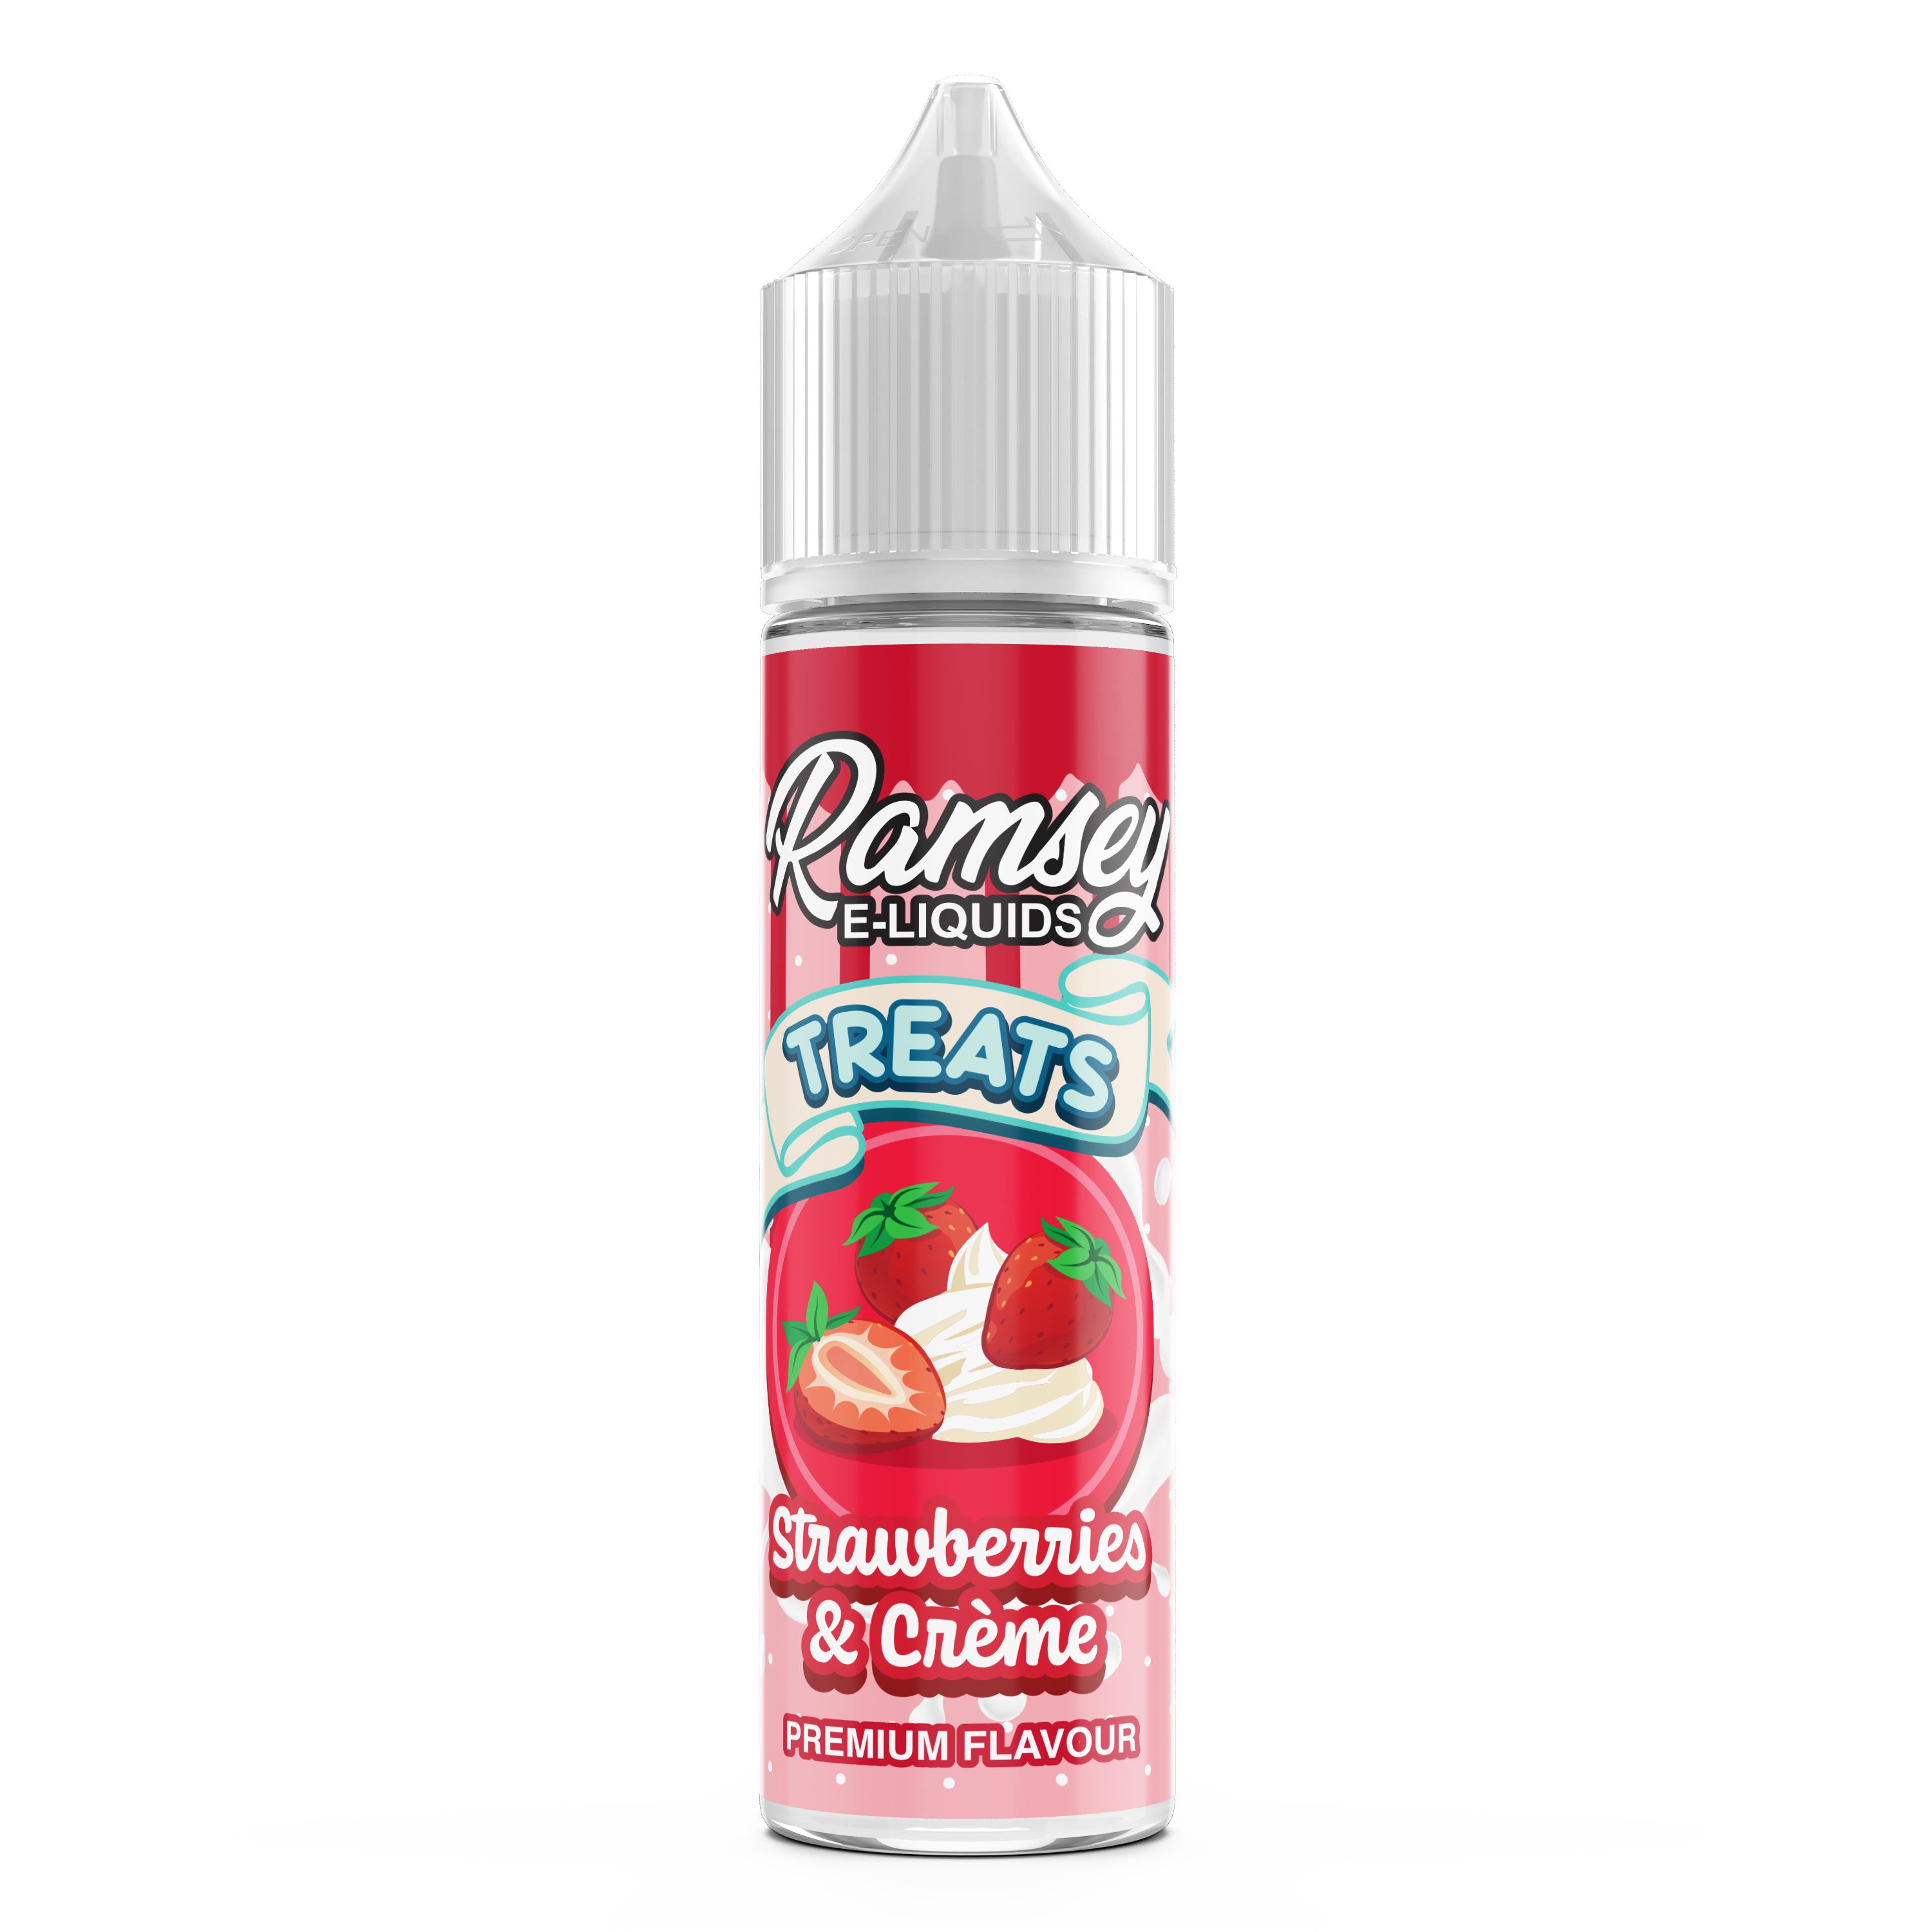 Ramsey E-Liquids Treats Strawberries & Cream 0mg 50ml Shortfill E-Liquid